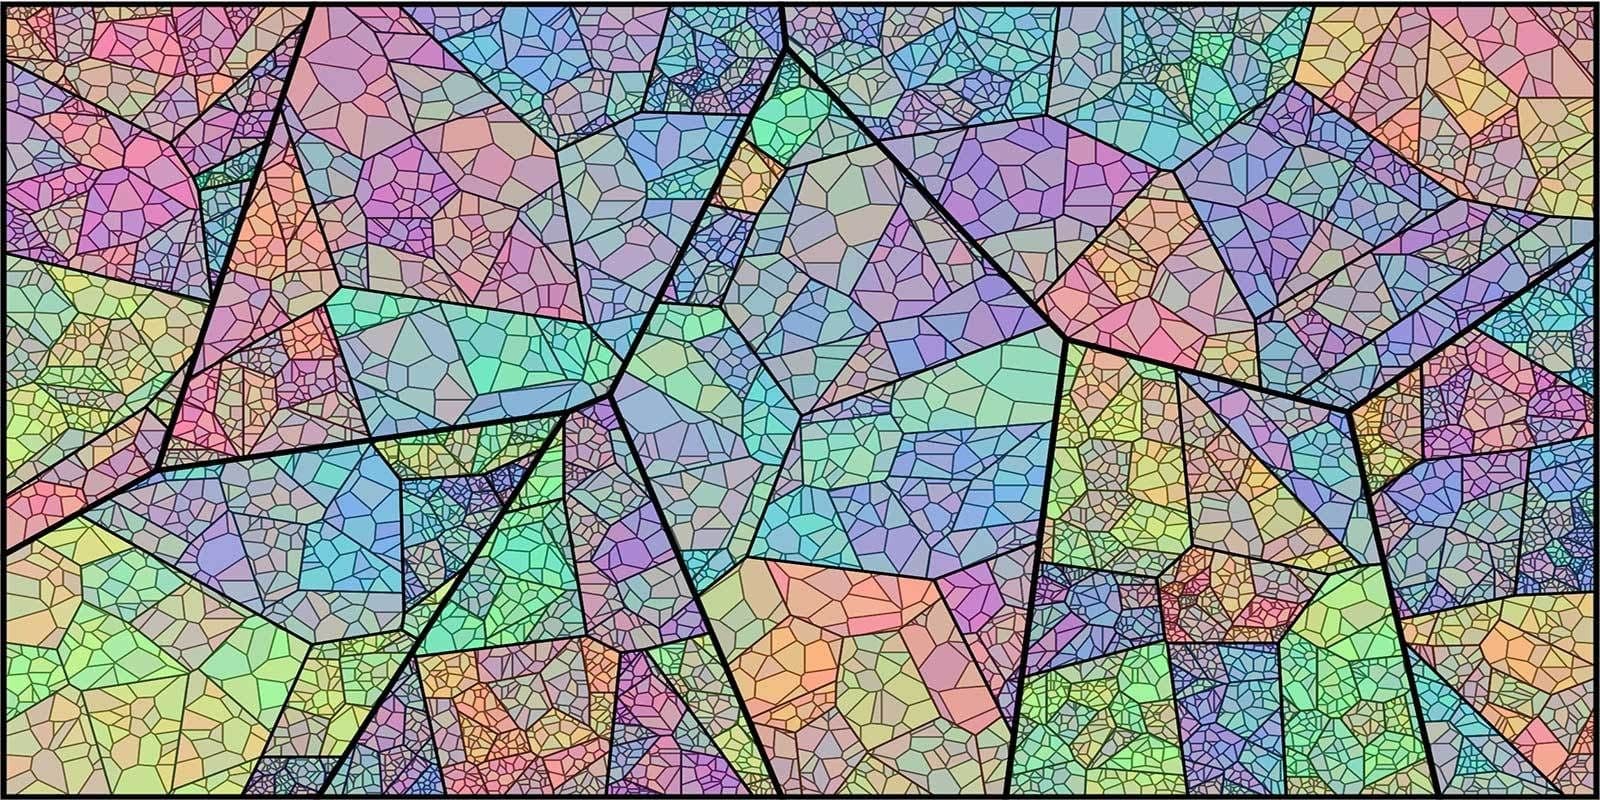 A Voronoi diagram in rainbow colors